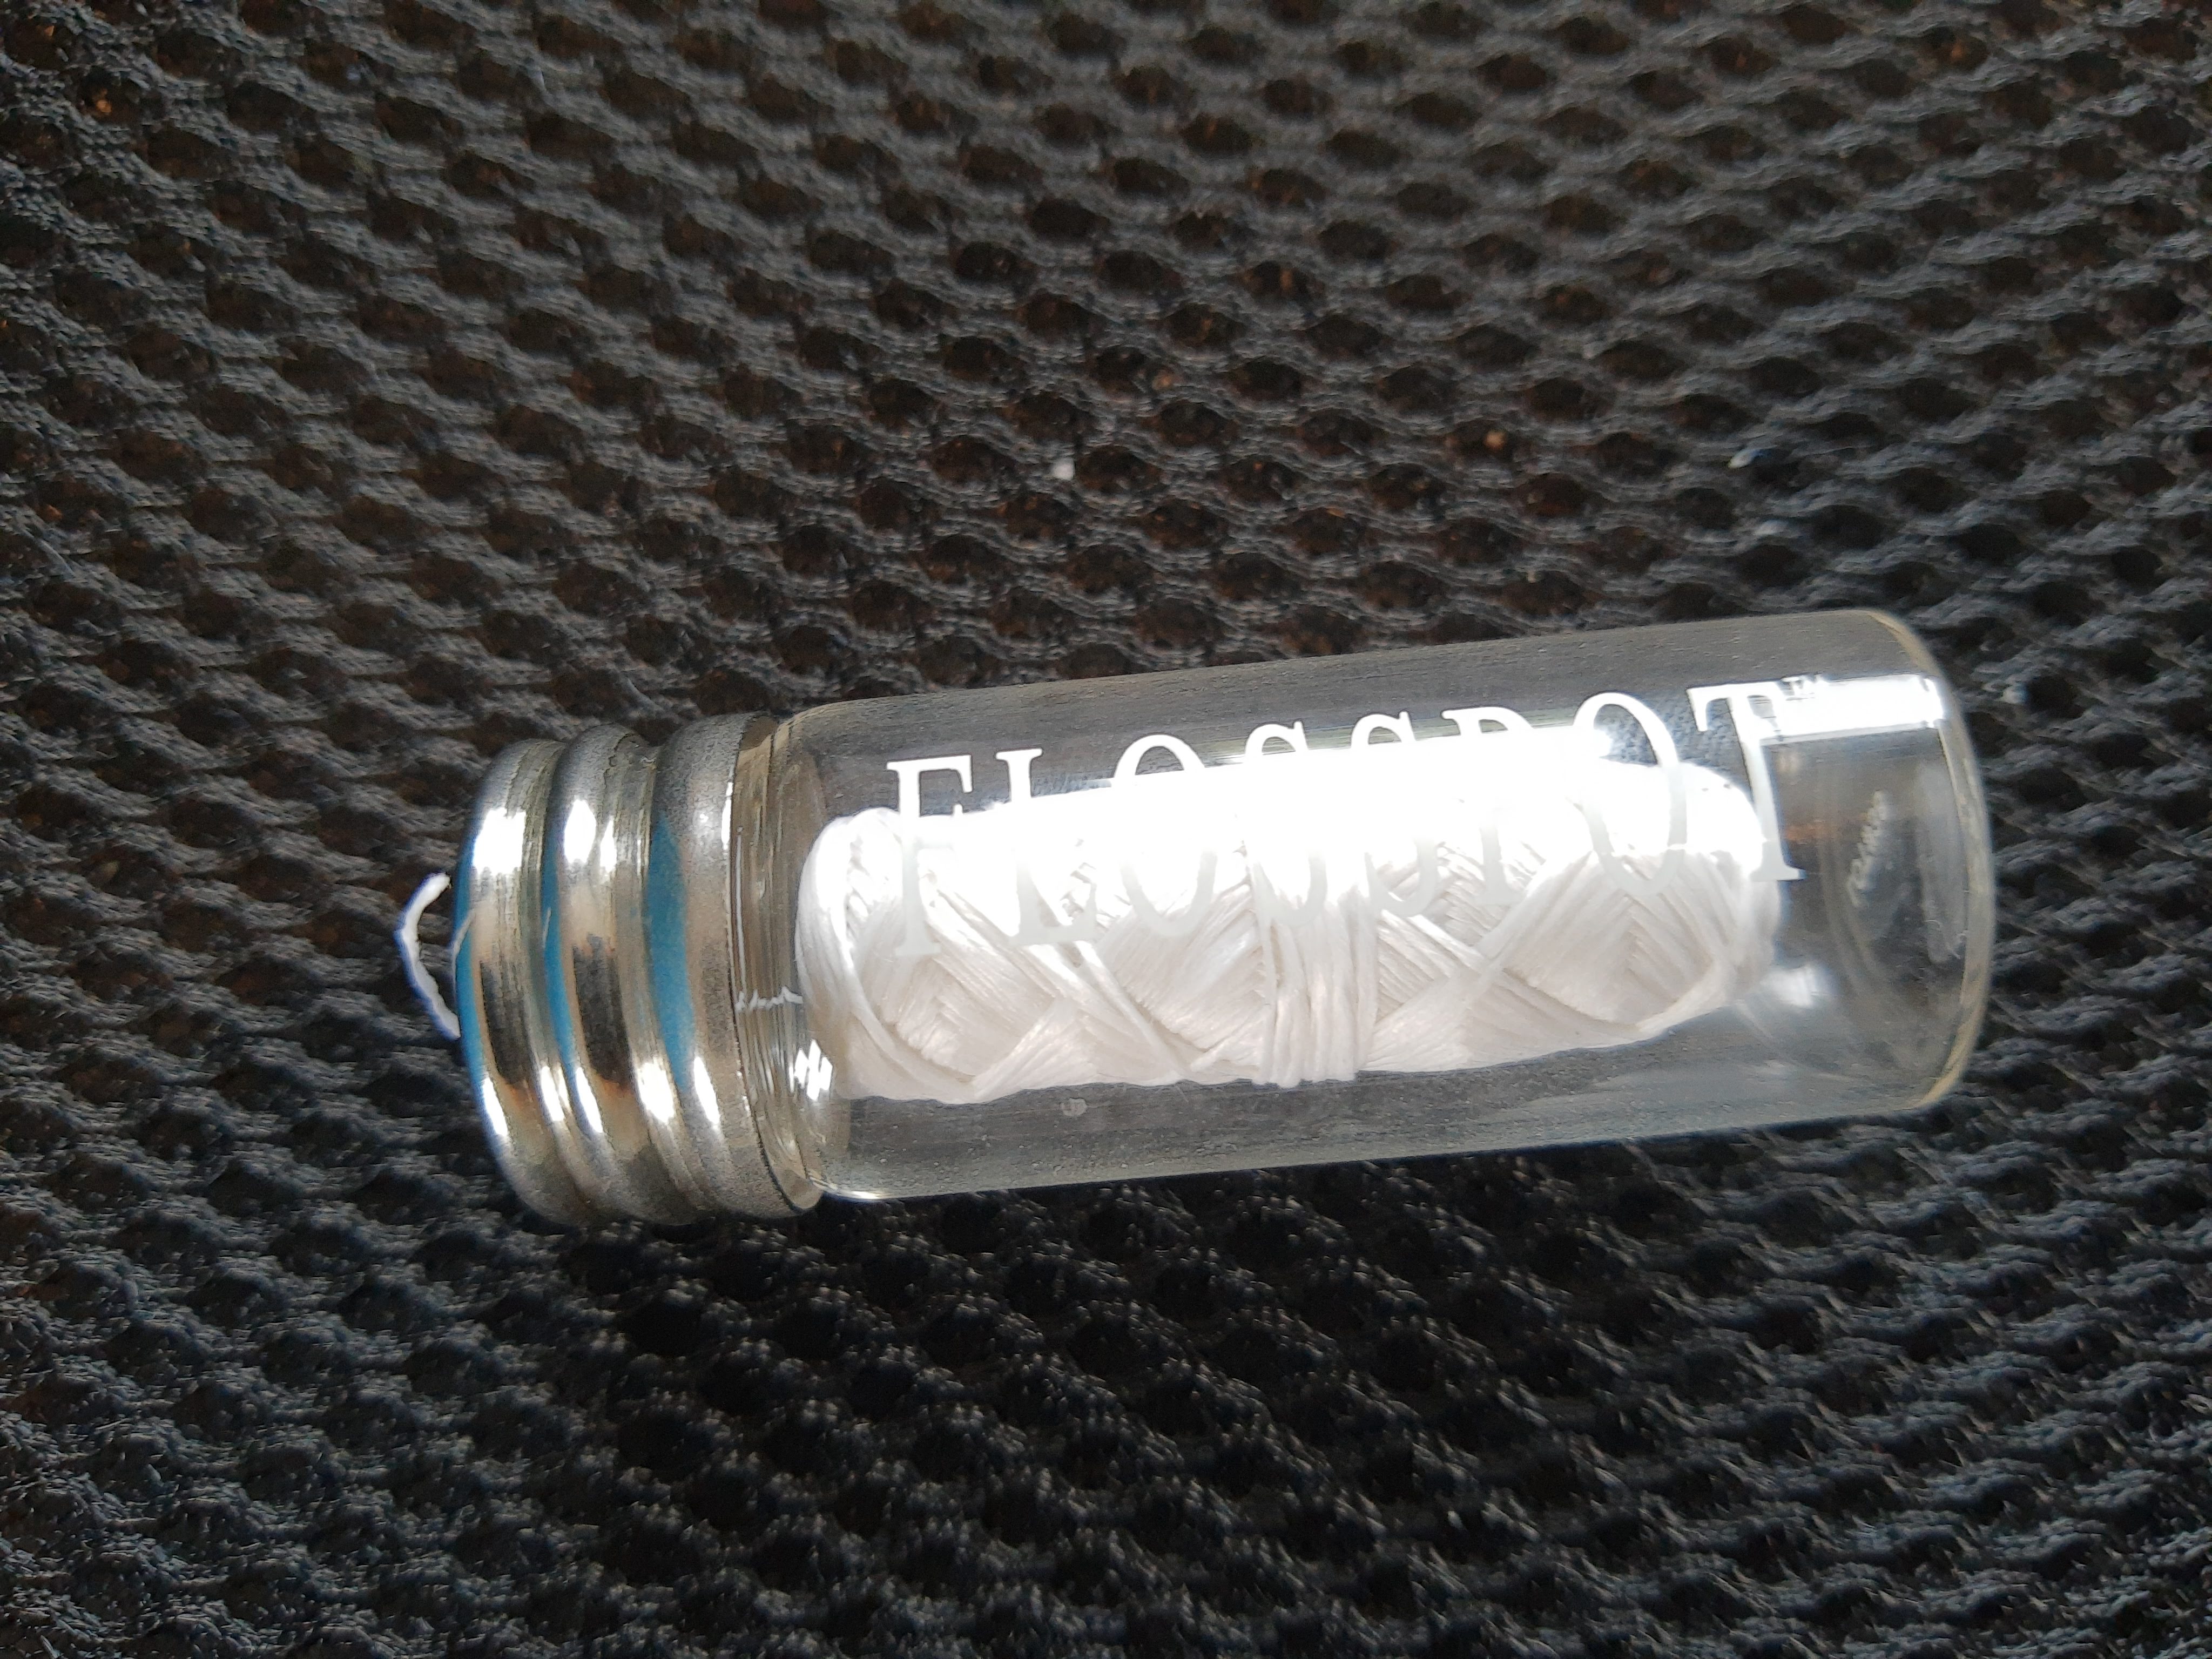 Dental floss in a glass jar